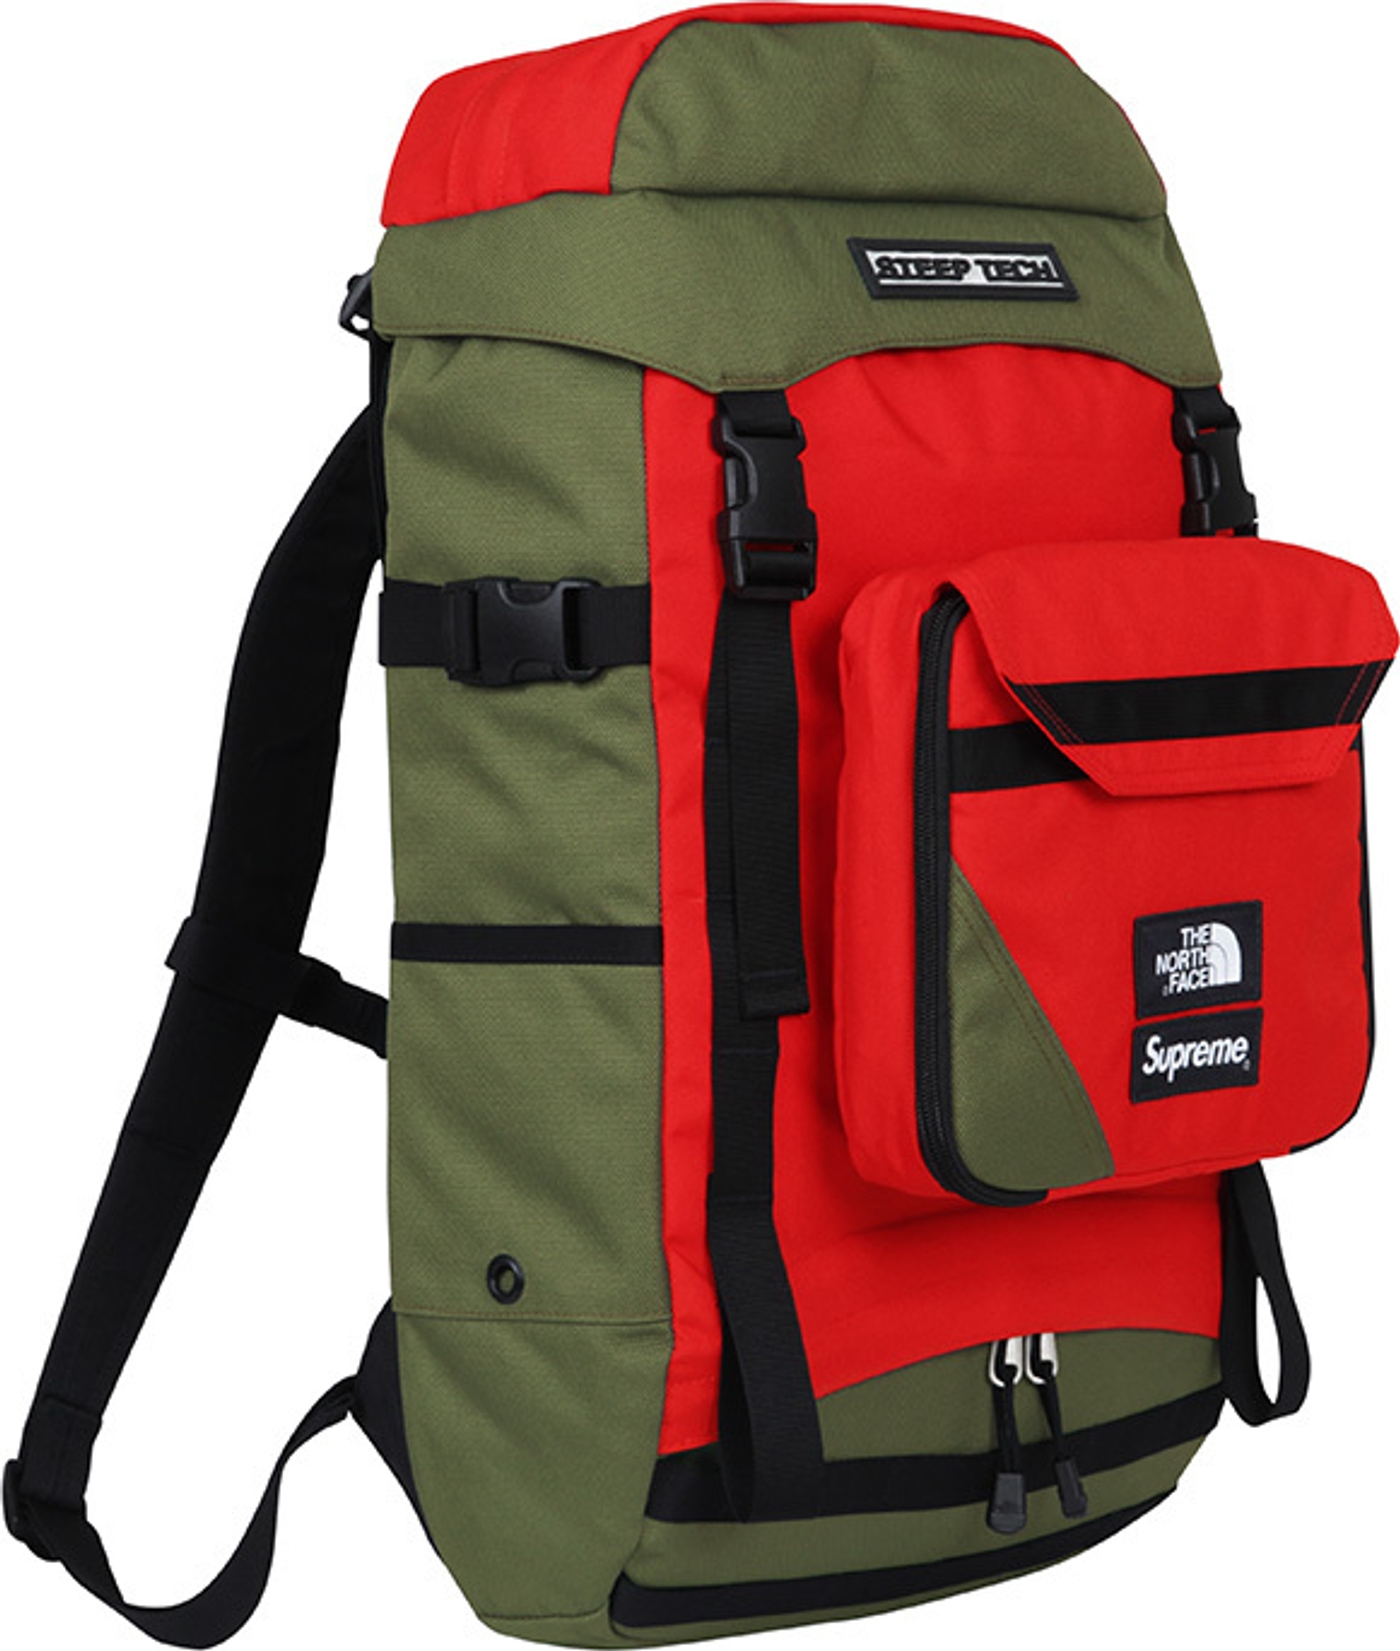 Steep Tech Backpack (35/36)